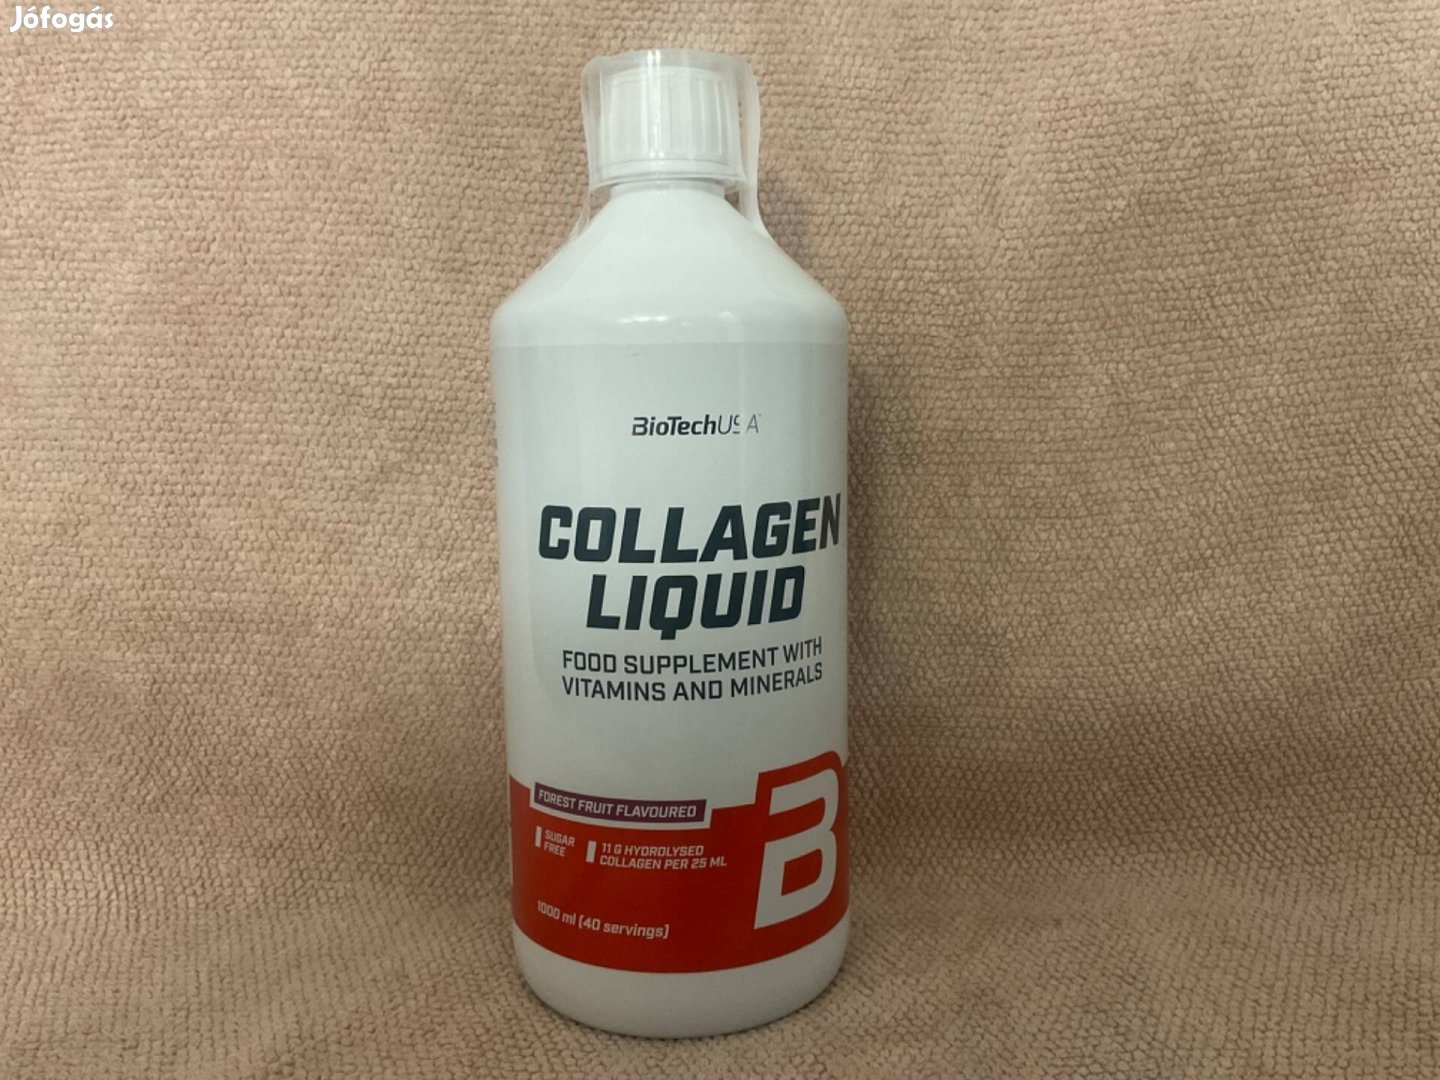 Collagen liquid Biotechusa